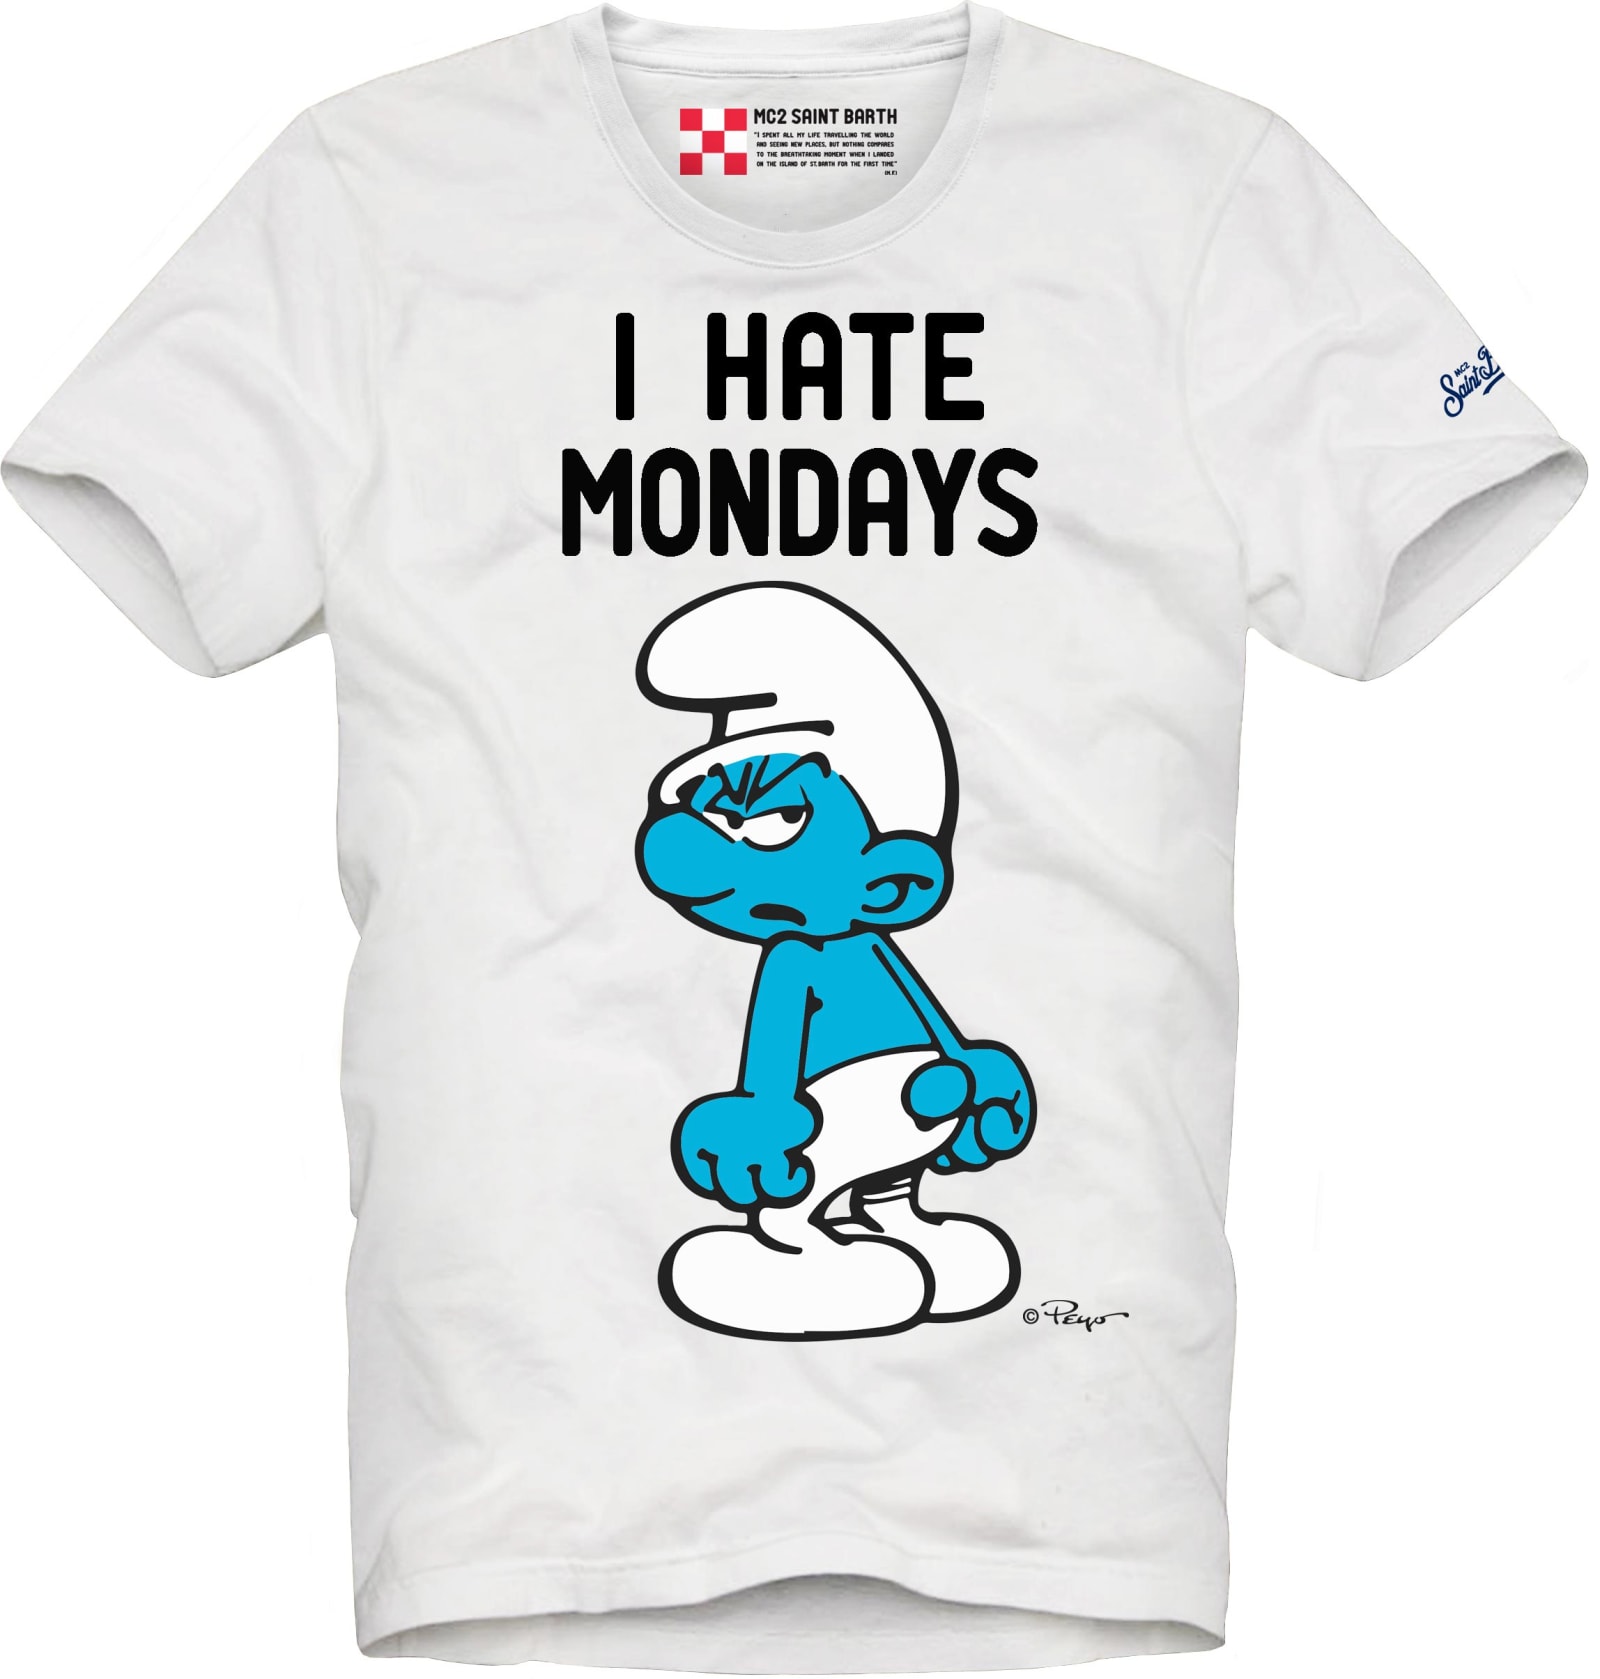 MC2 Saint Barth I Hate Mondays Printed White T-shirt - The Smurfs Special Edition ®